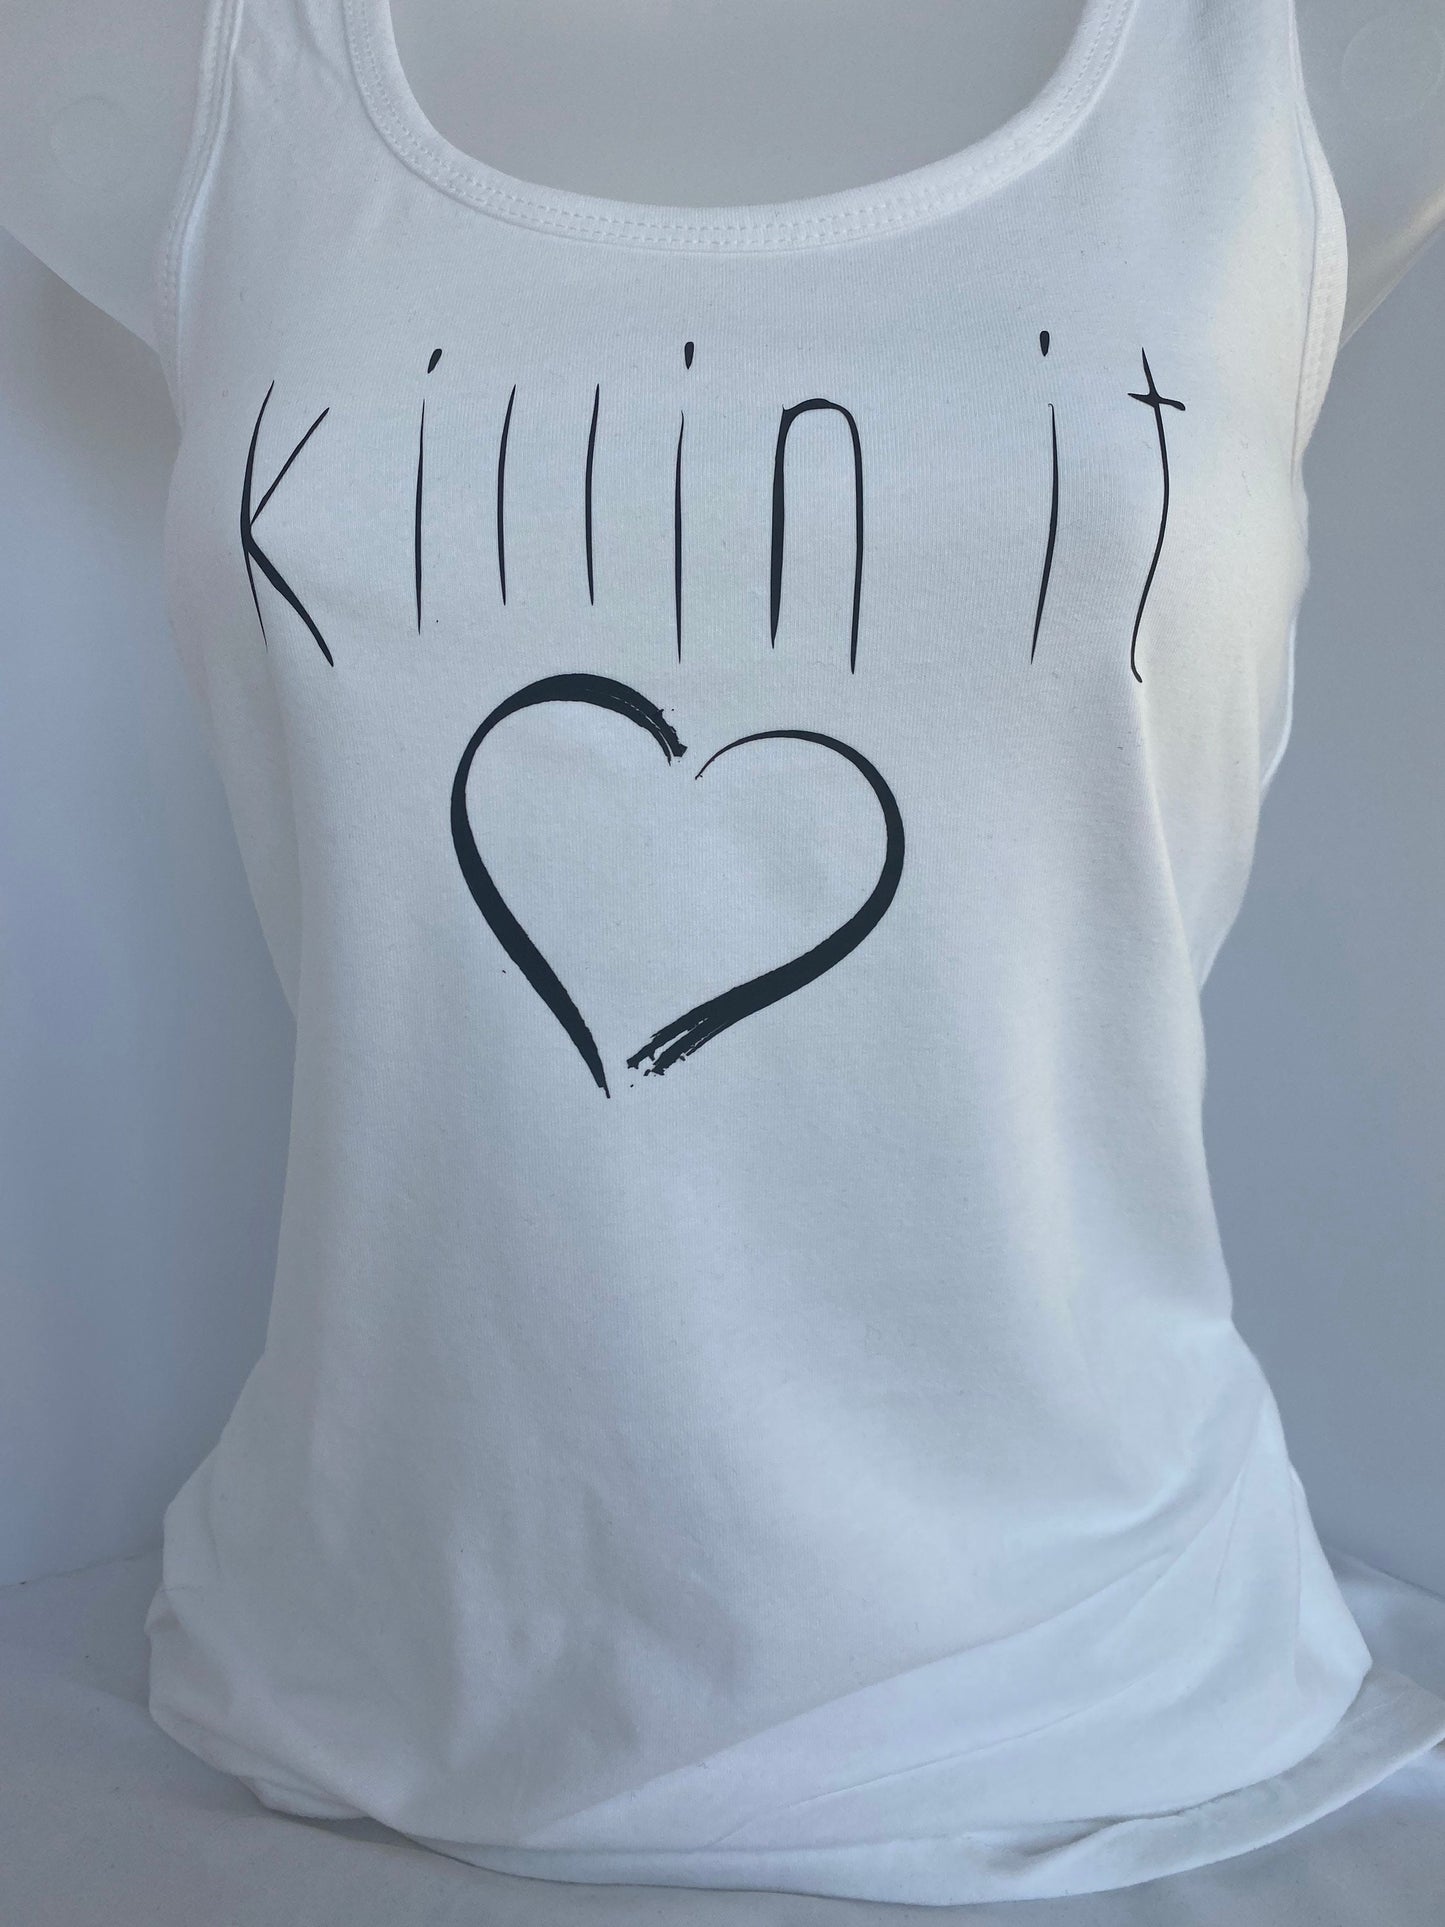 Killin it T-Shirt, Tank, Hoodie, or Tote, empowerment, inspirational message, motivational shirt